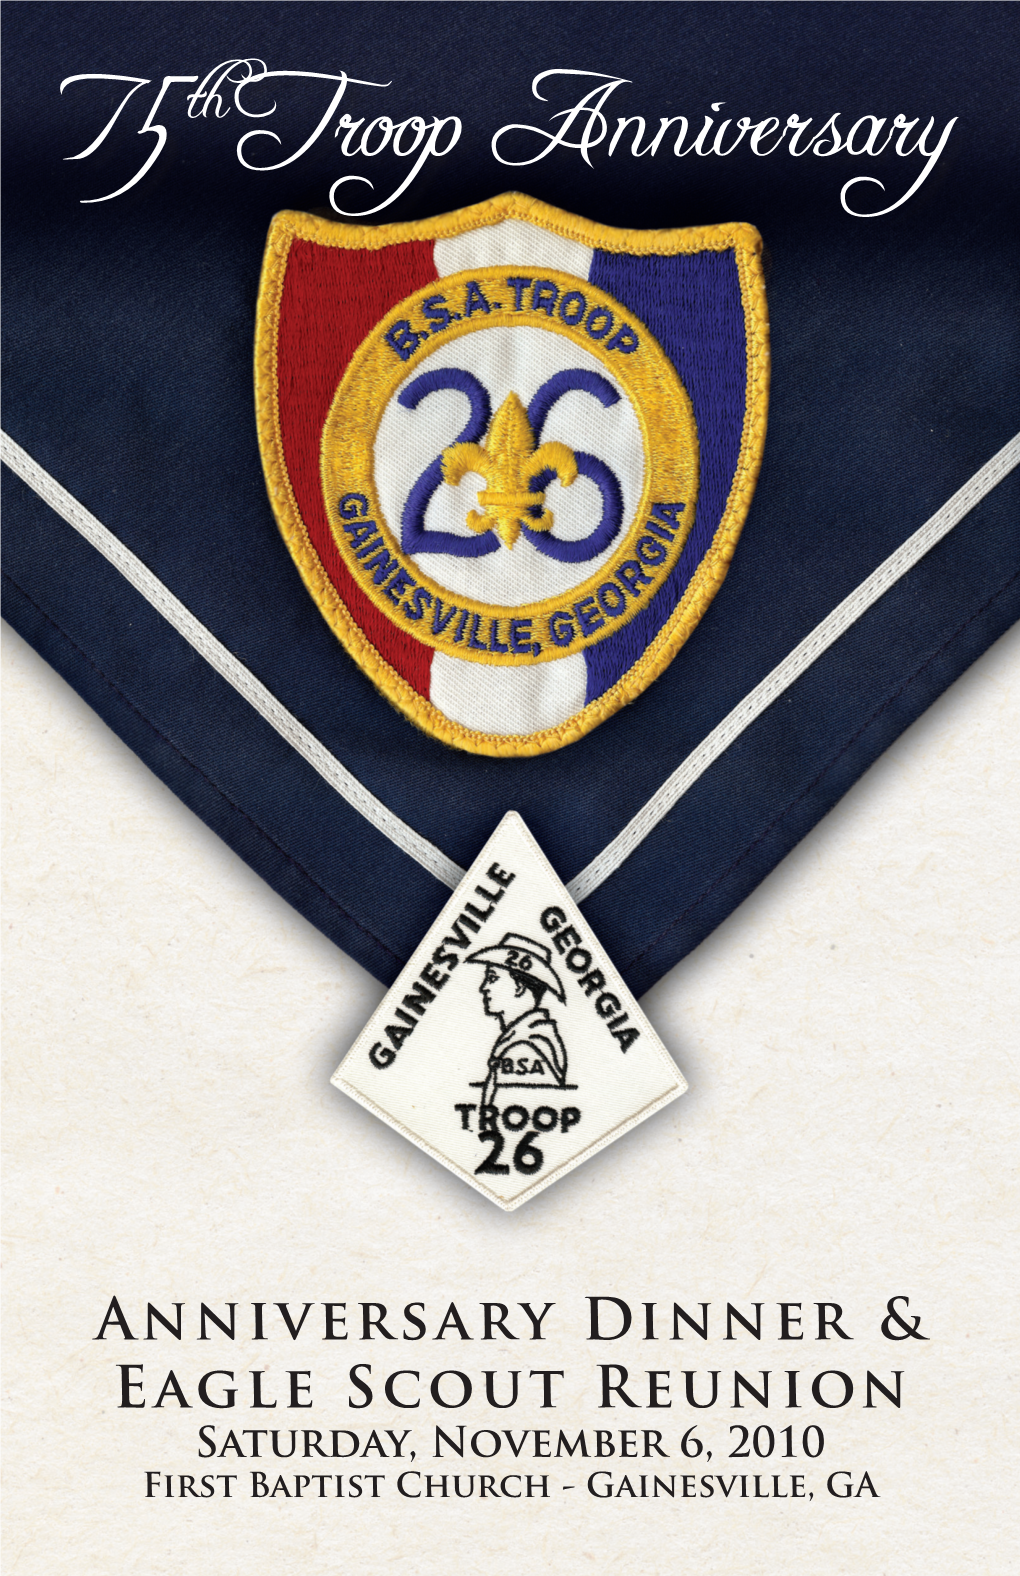 75Th Troop Anniversary